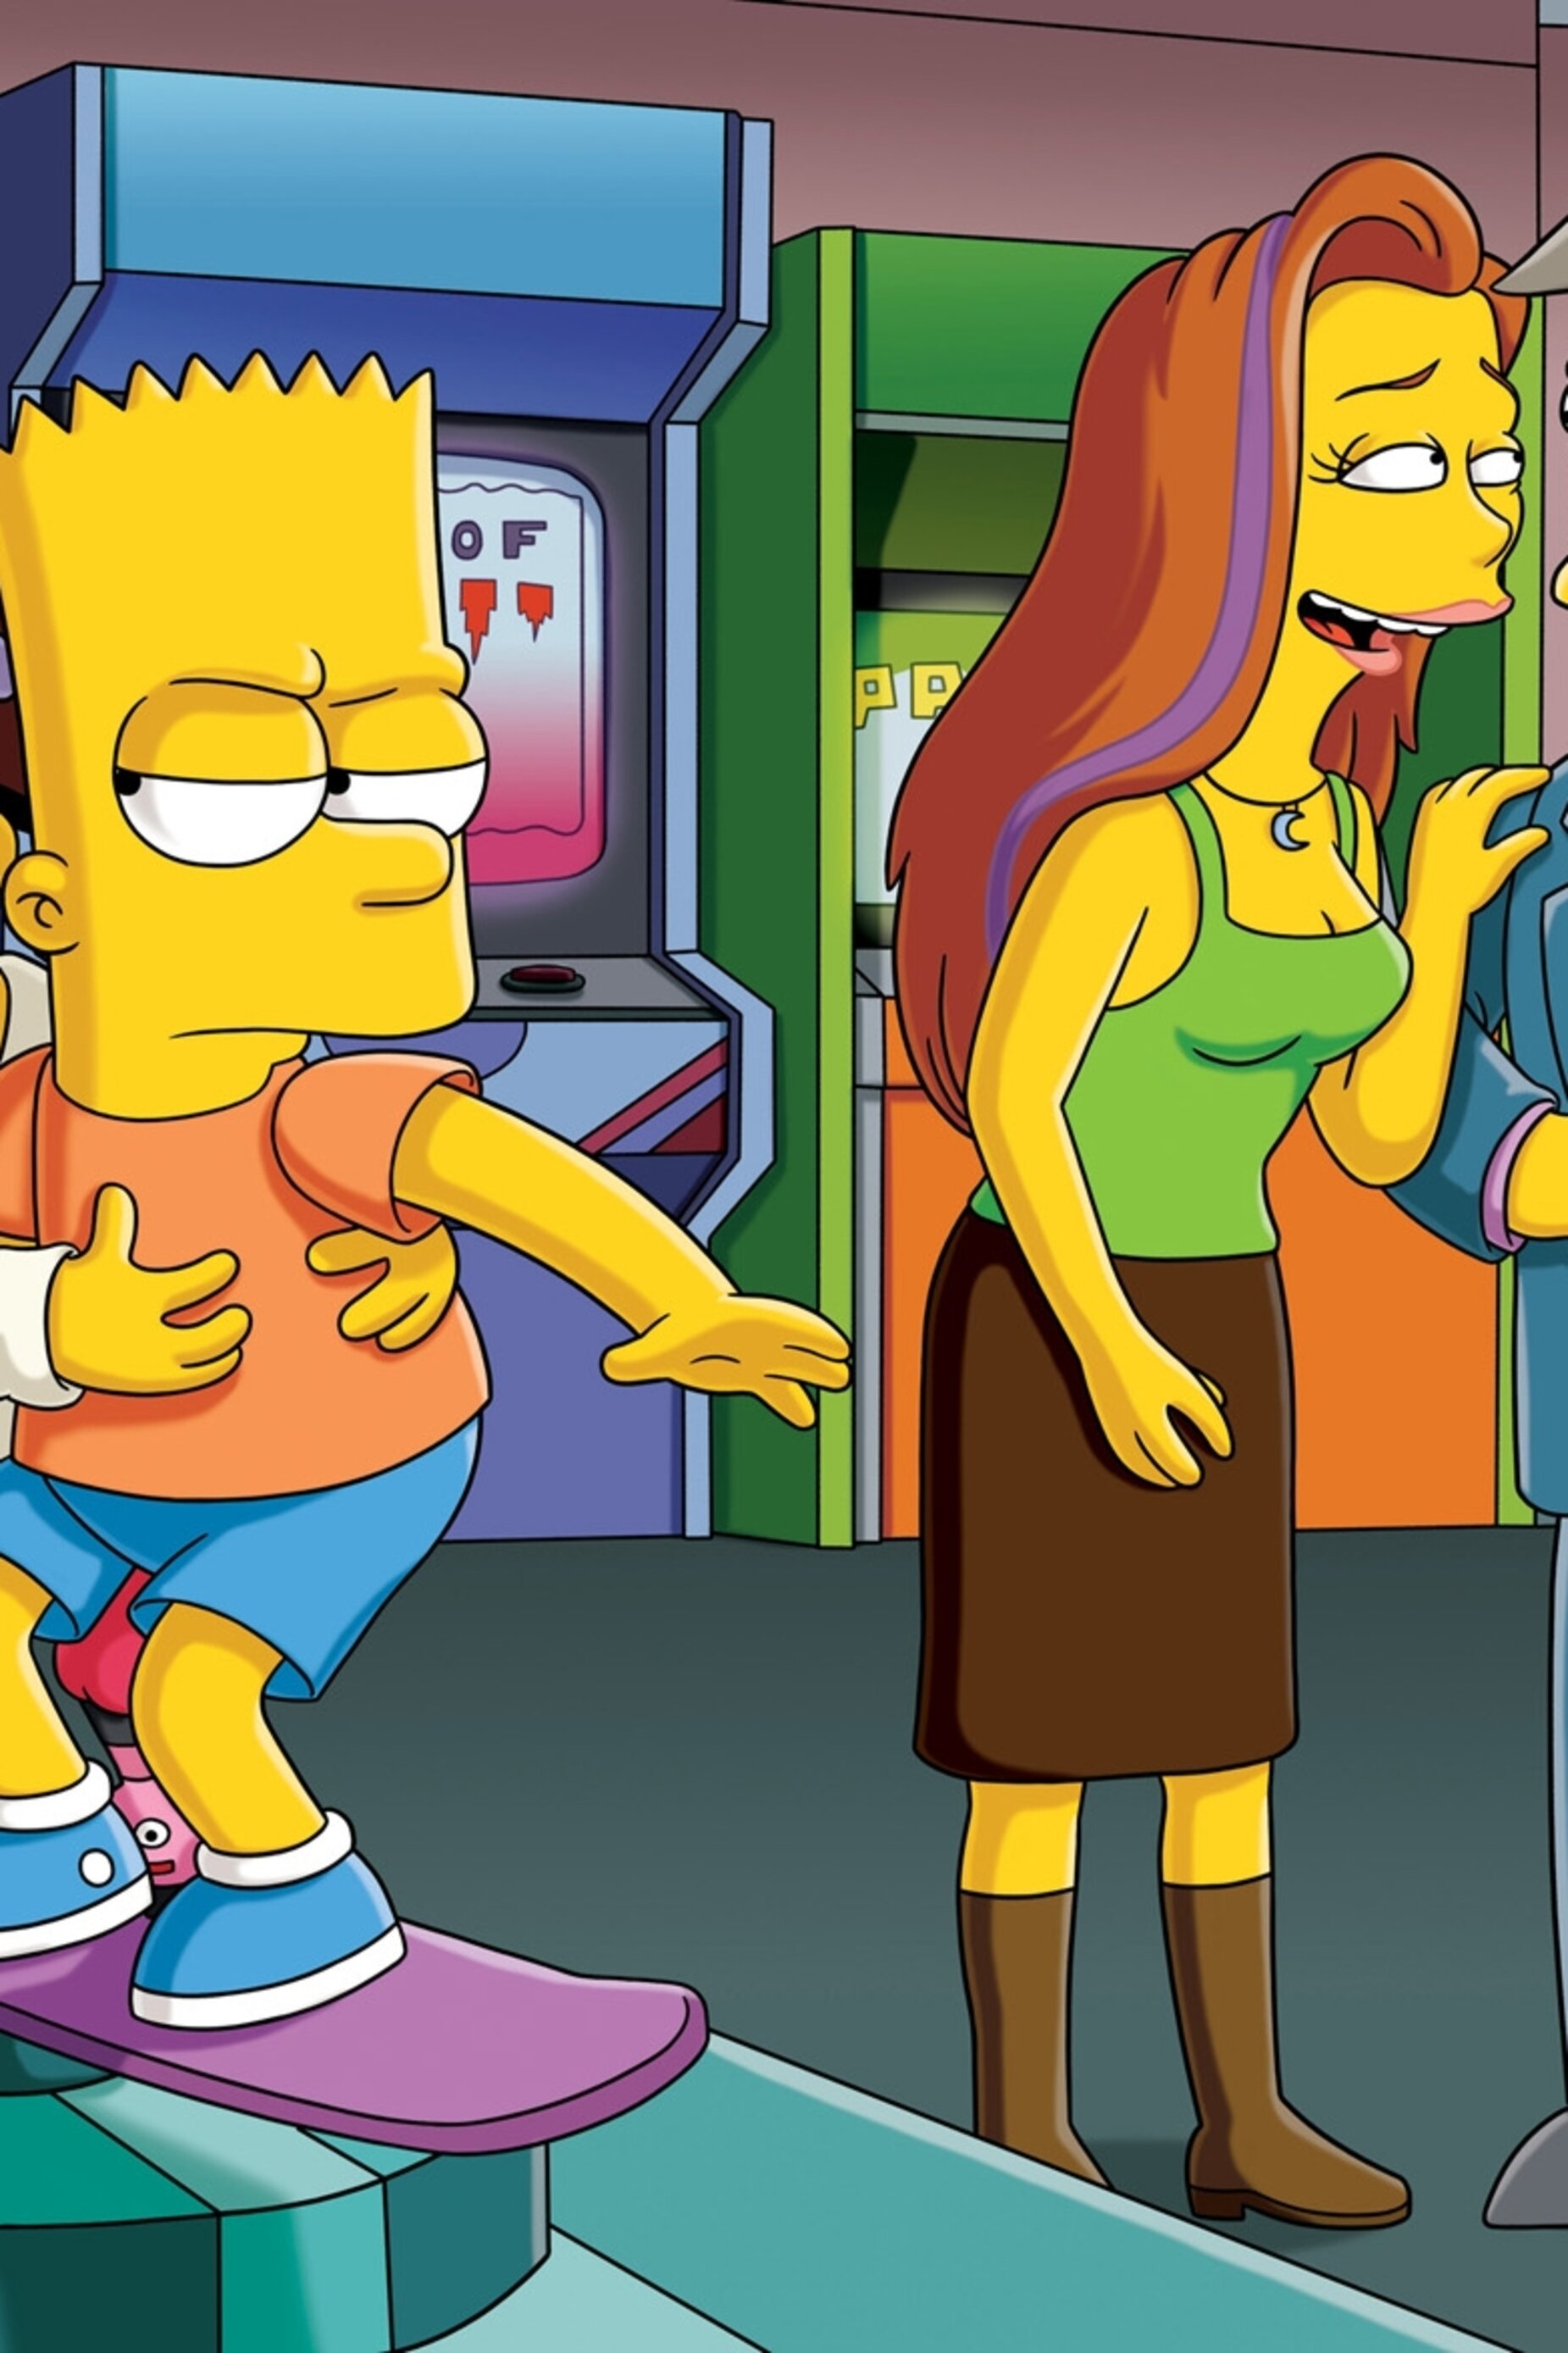 The Simpsons - Flaming Moe